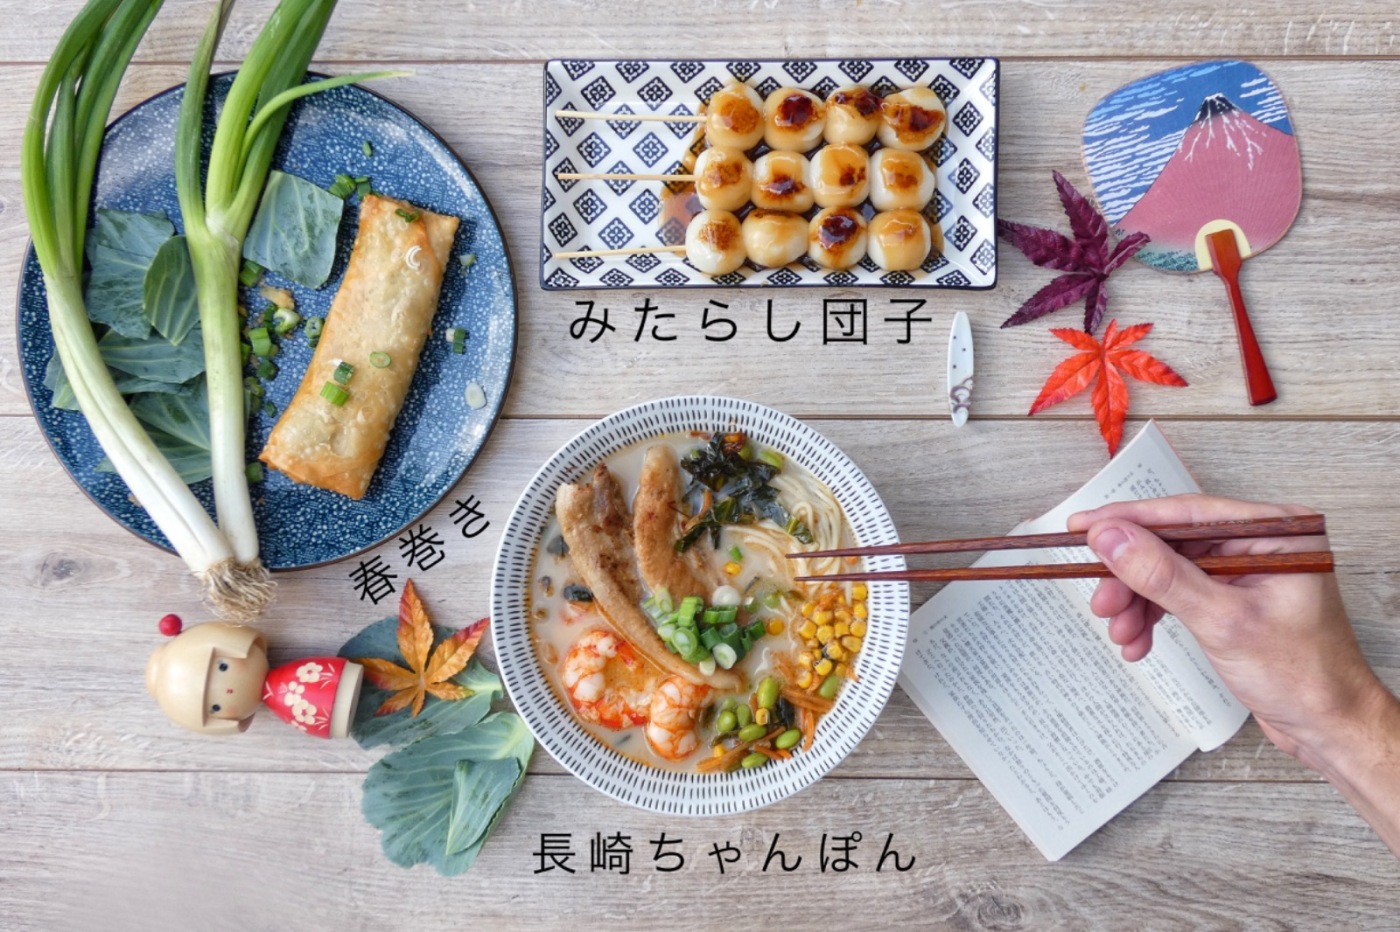 Lezione di cucina giapponese! – PIATTORANOCCHIO